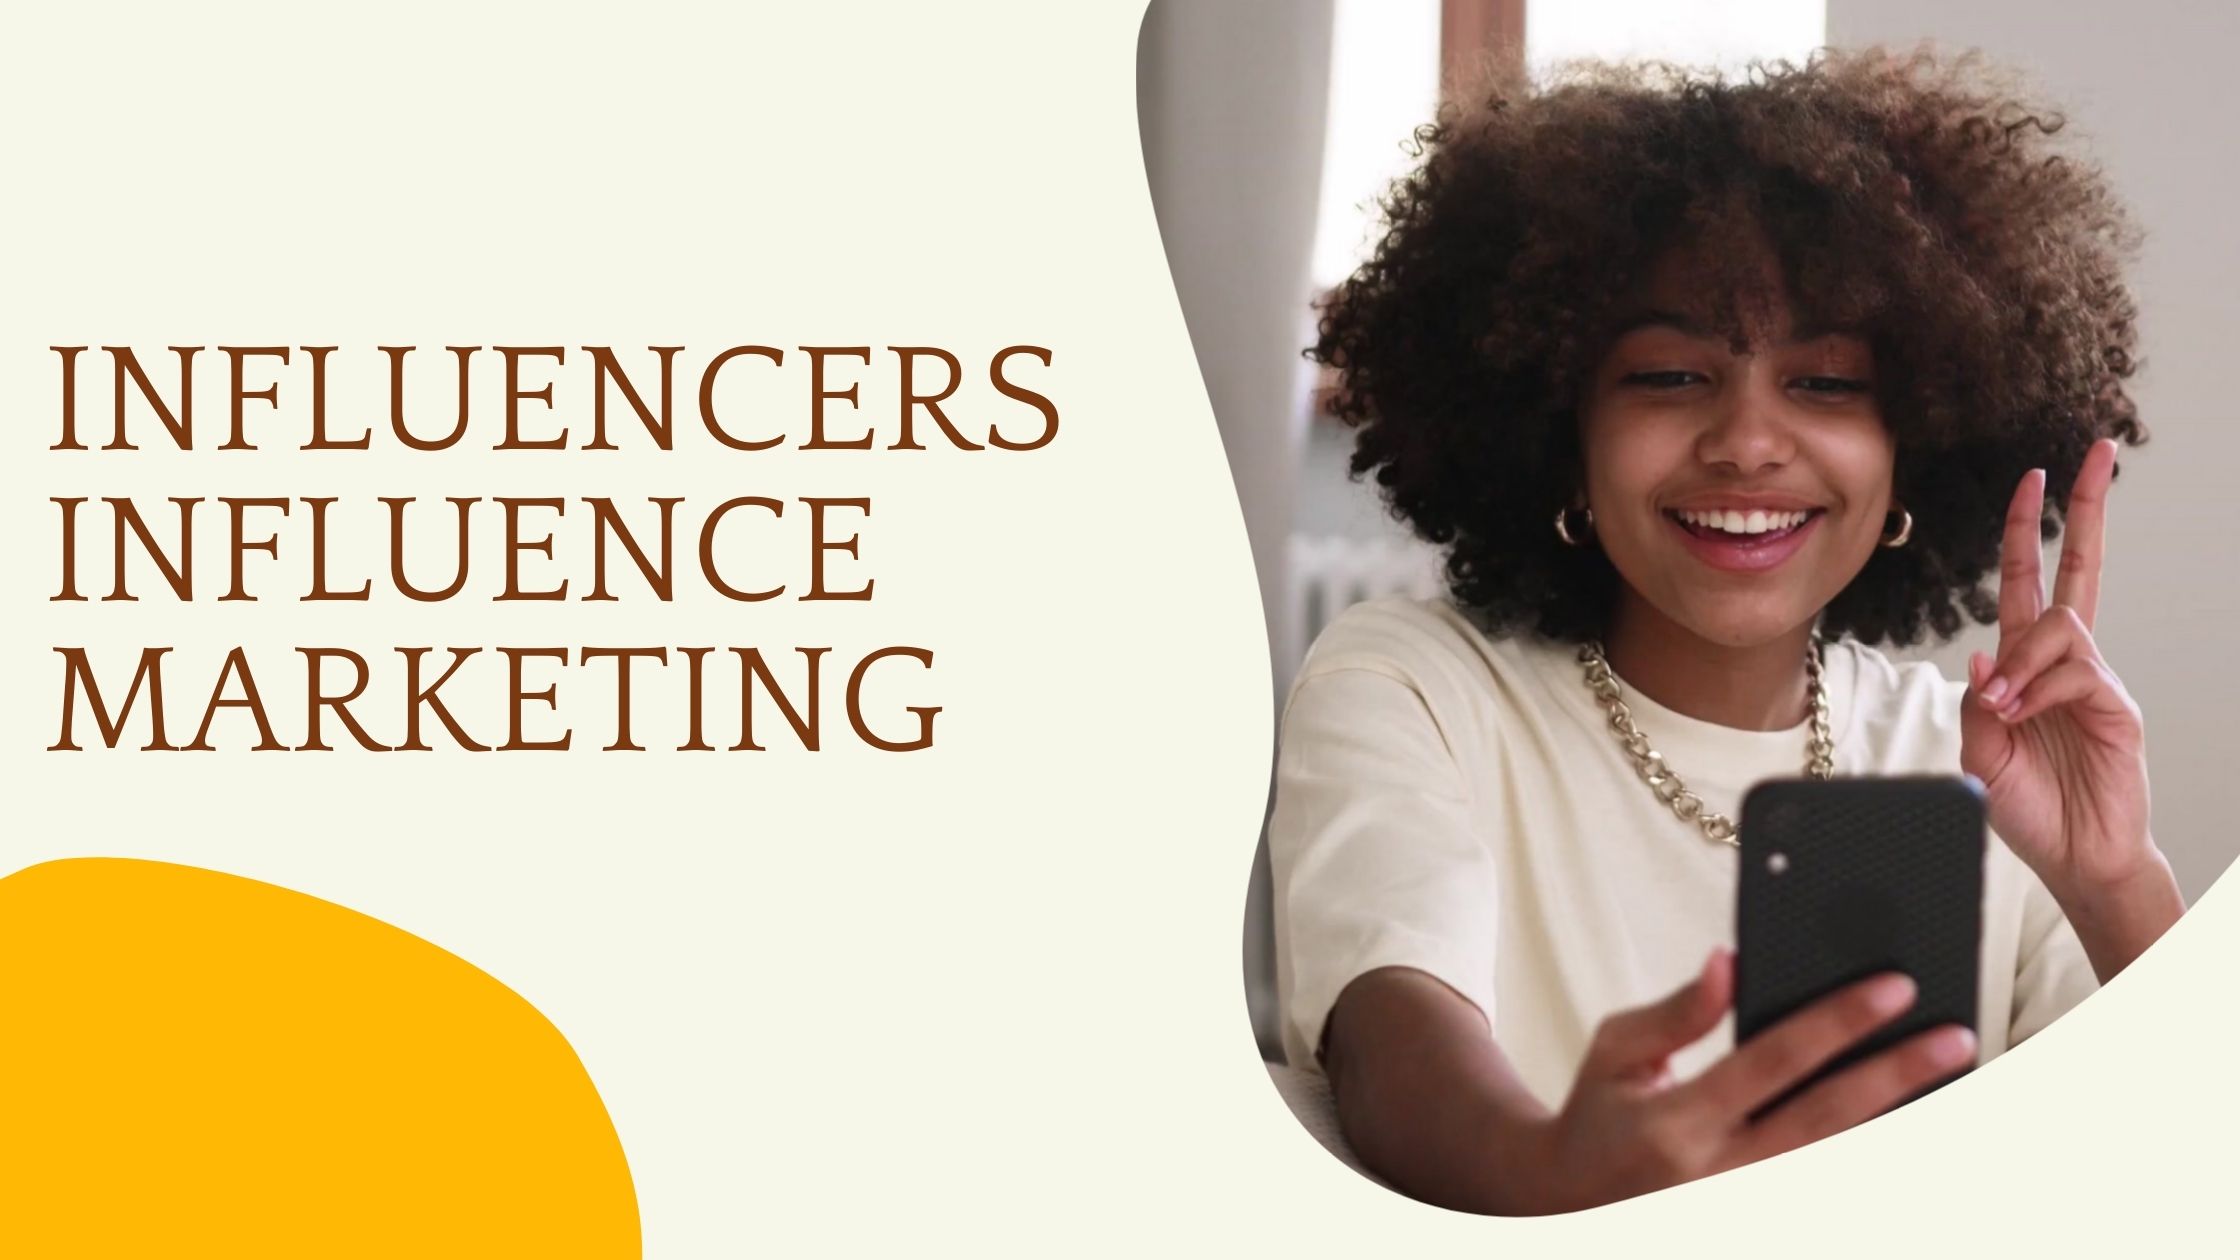 Influencers influence marketing